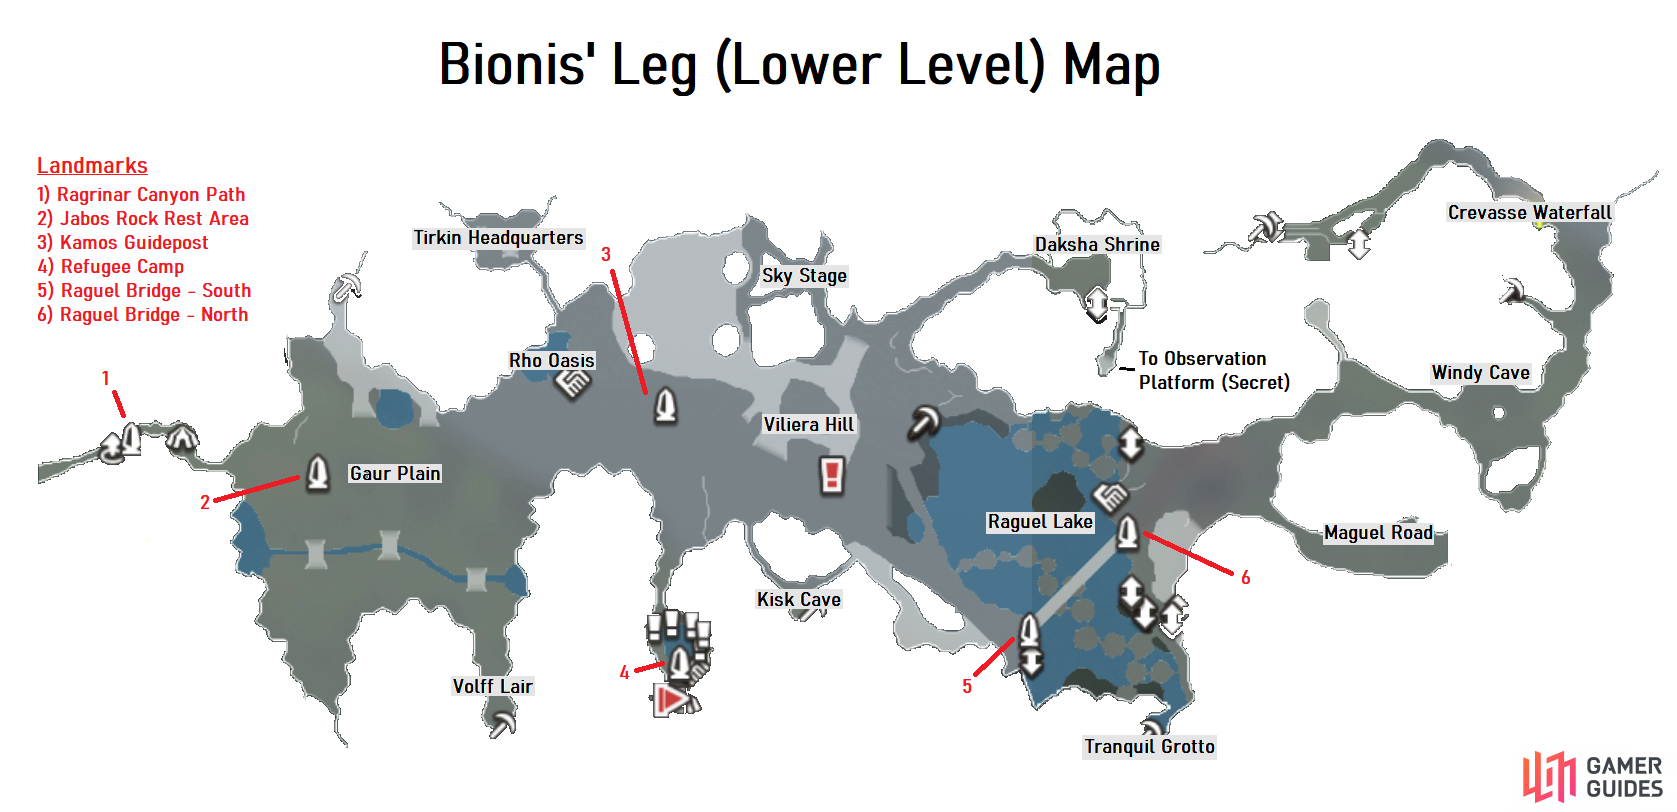 Lower Level Map for Bionis’ Leg